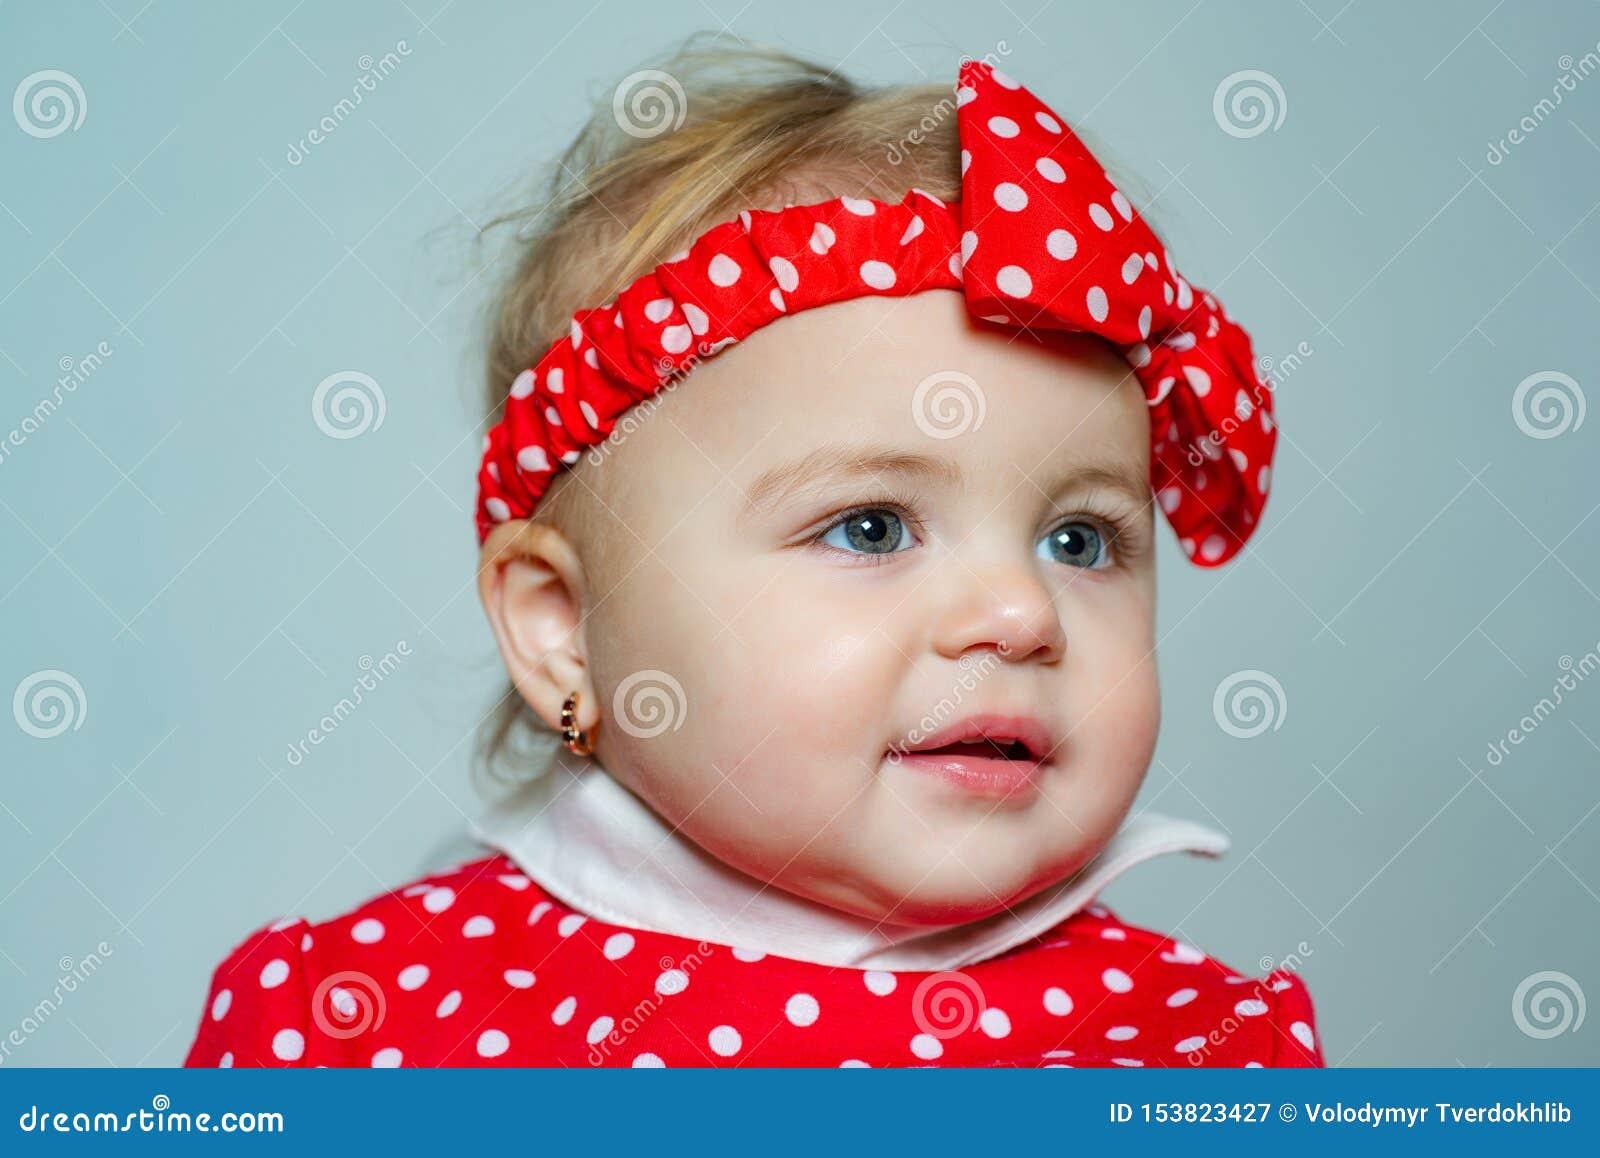 Cute Baby Girl Red Polka Dot Bow on Head. Fashion Accessory ...